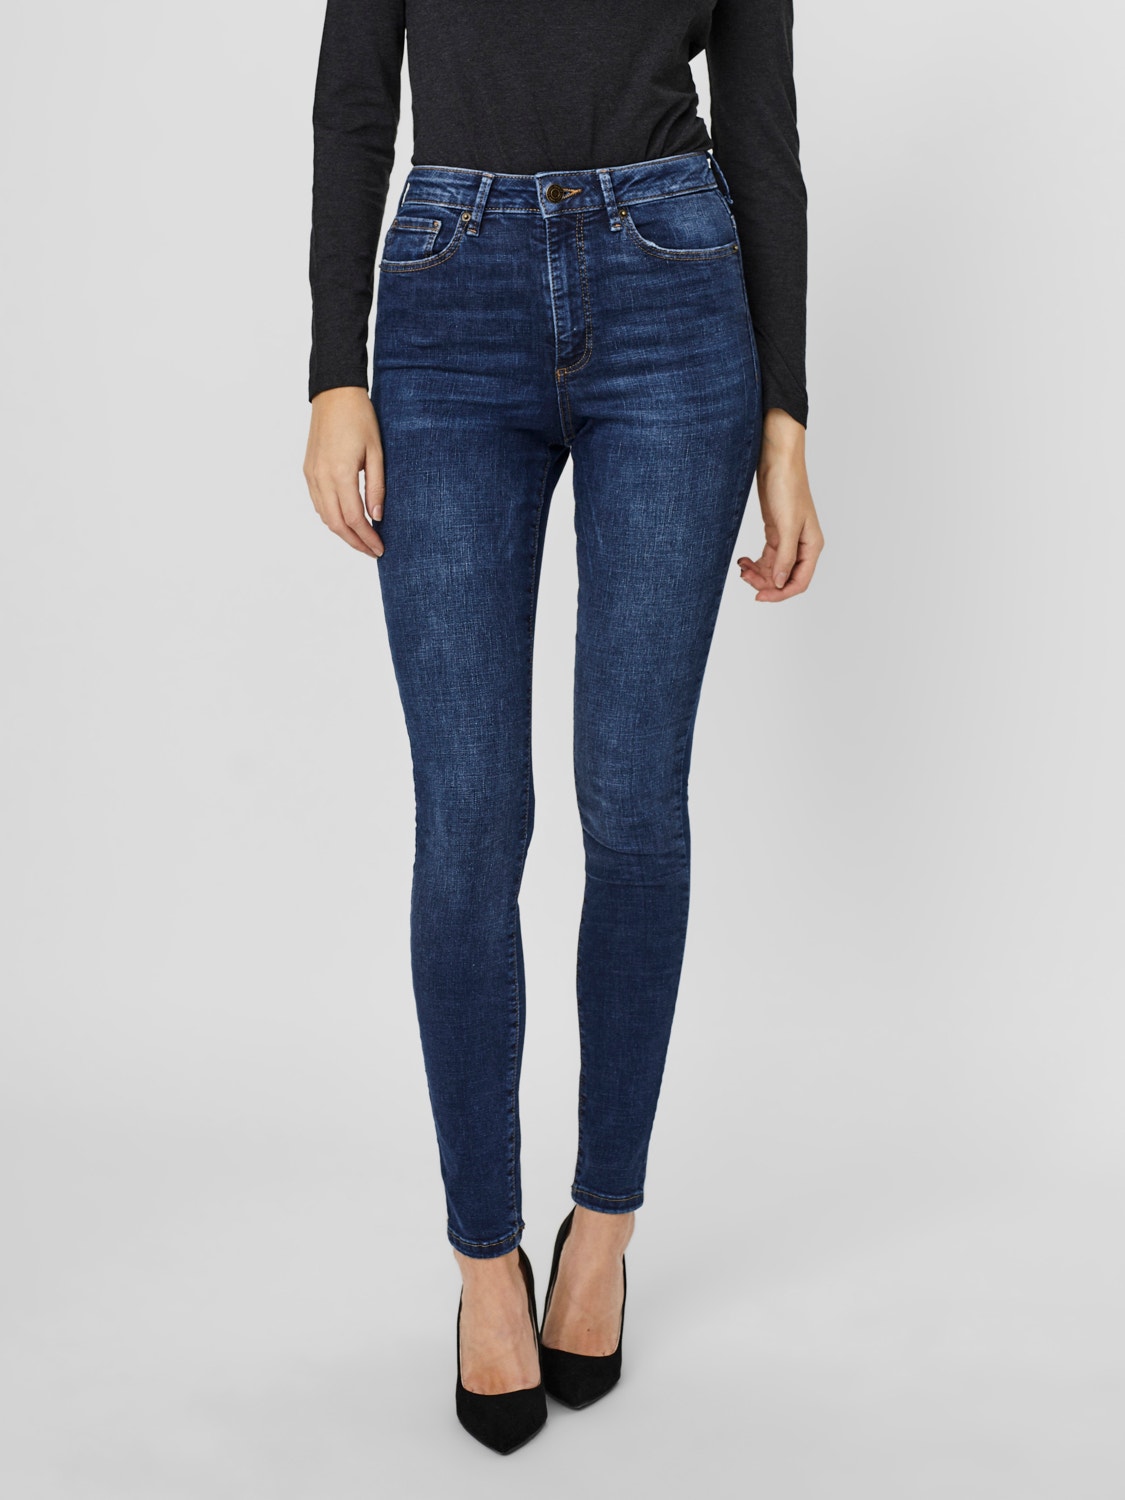 VMSOPHIA High rise Jeans 40% discount! Moda® Vero with 